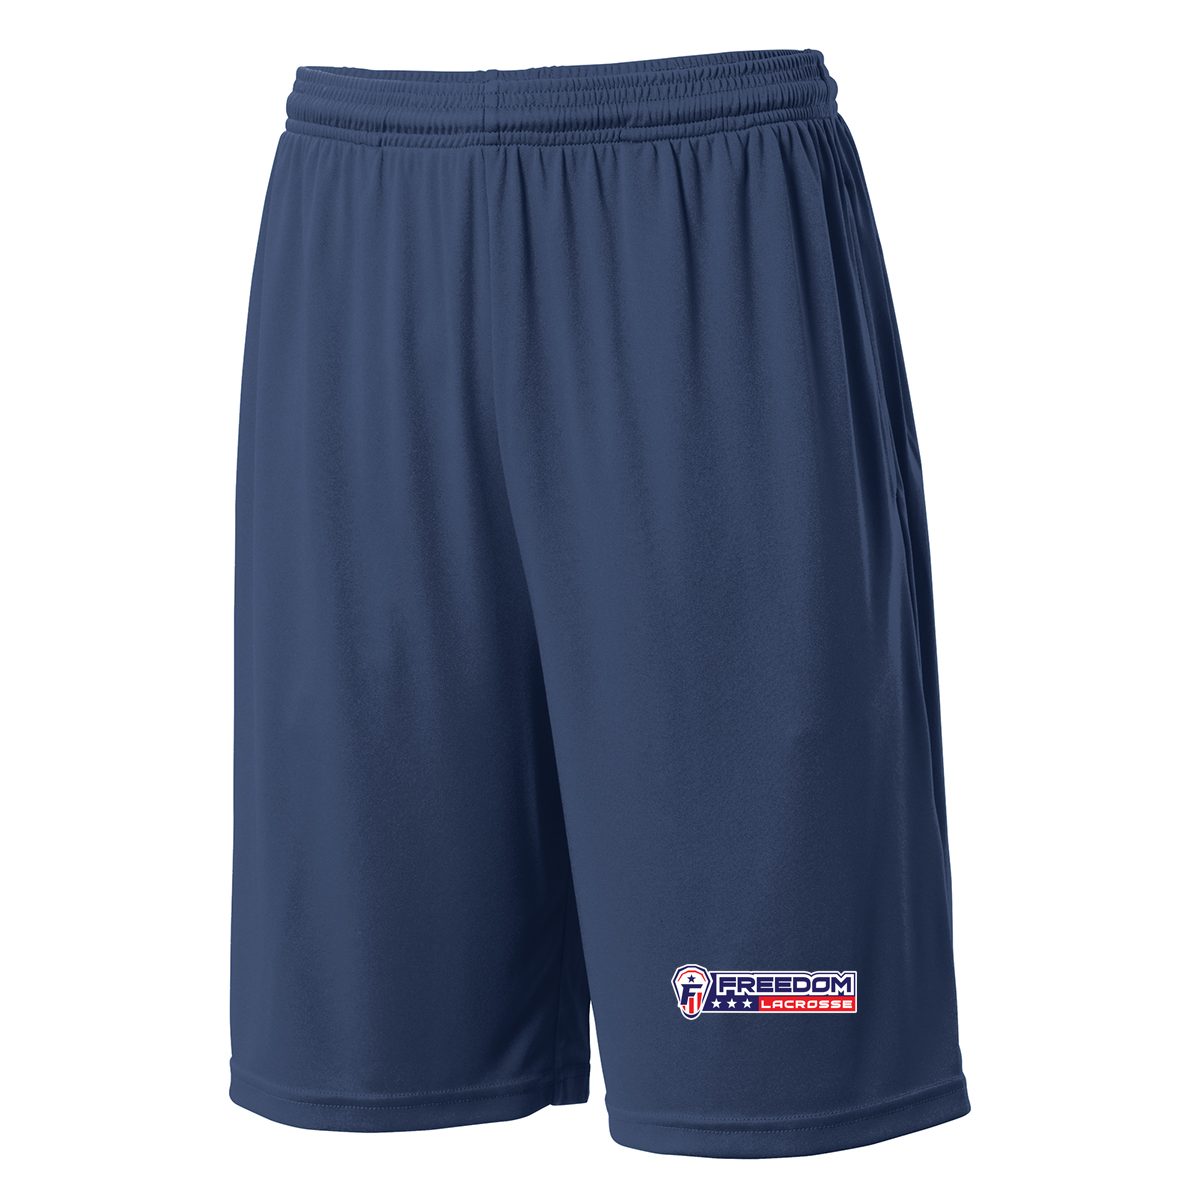 Freedom Lacrosse Navy Shorts